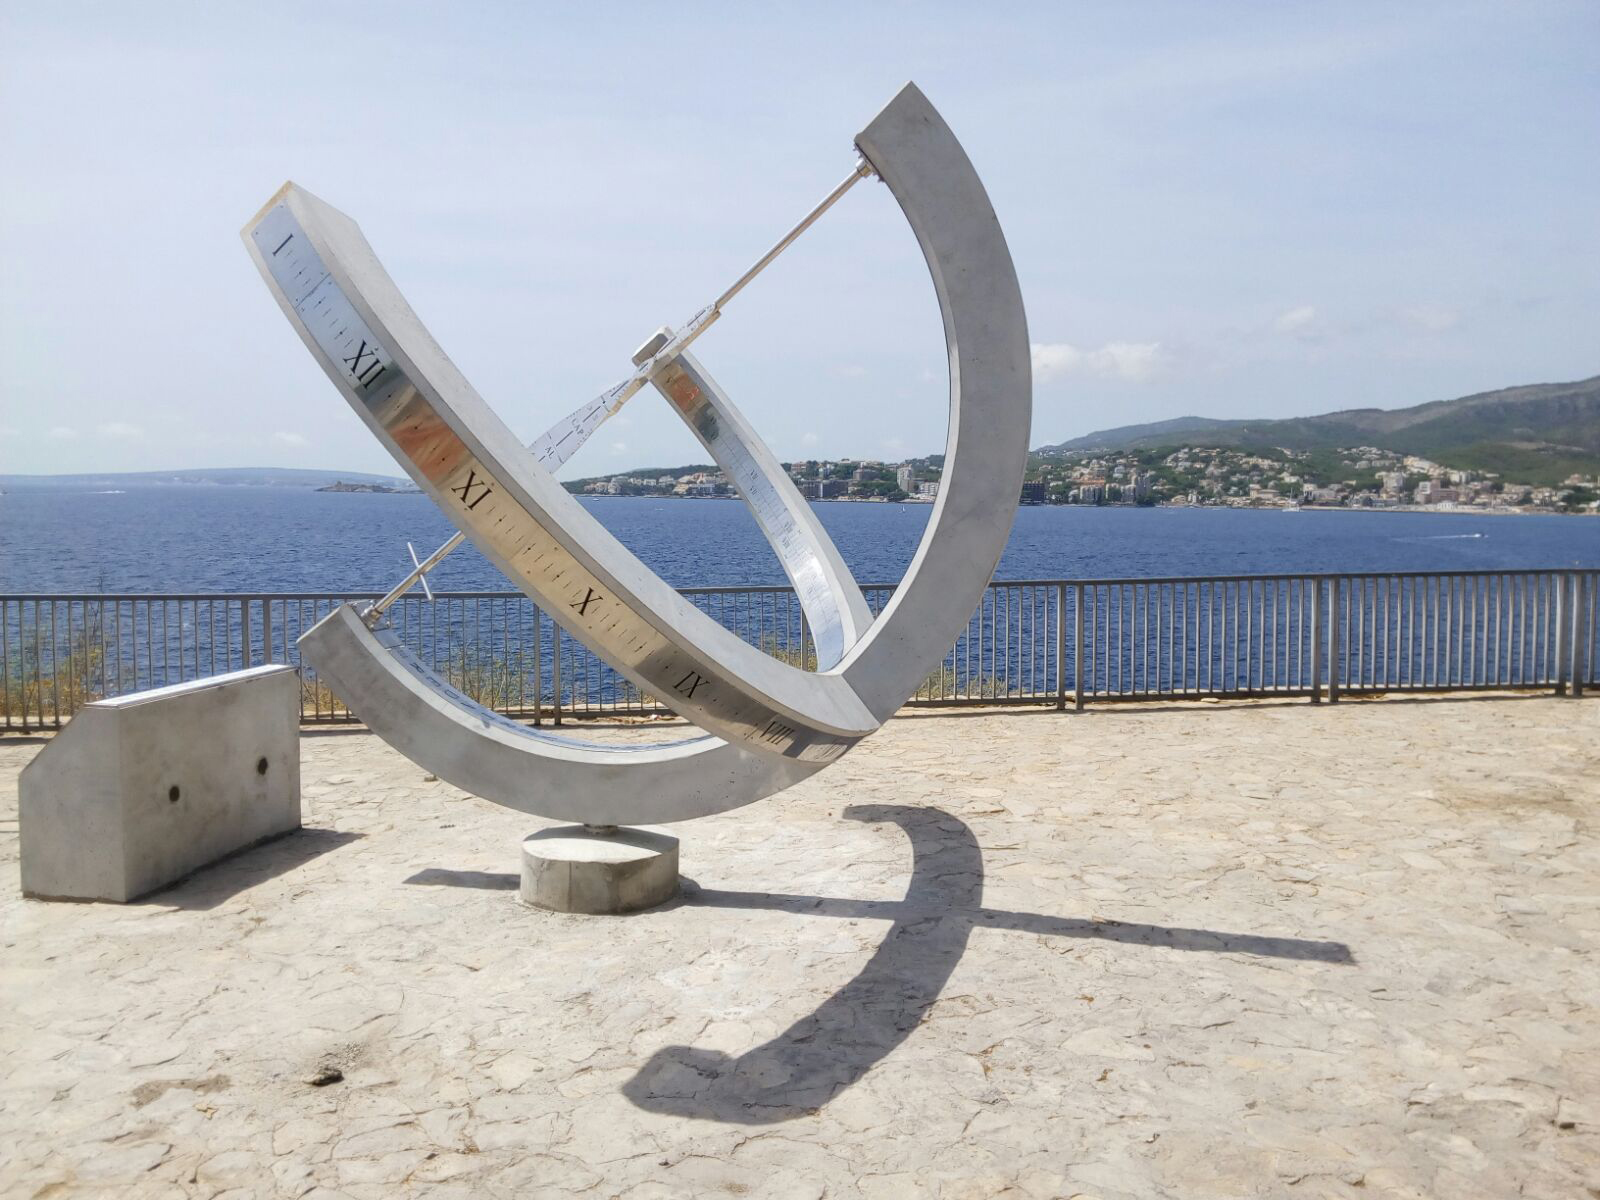 A new equatorial sundial for the port of Palma